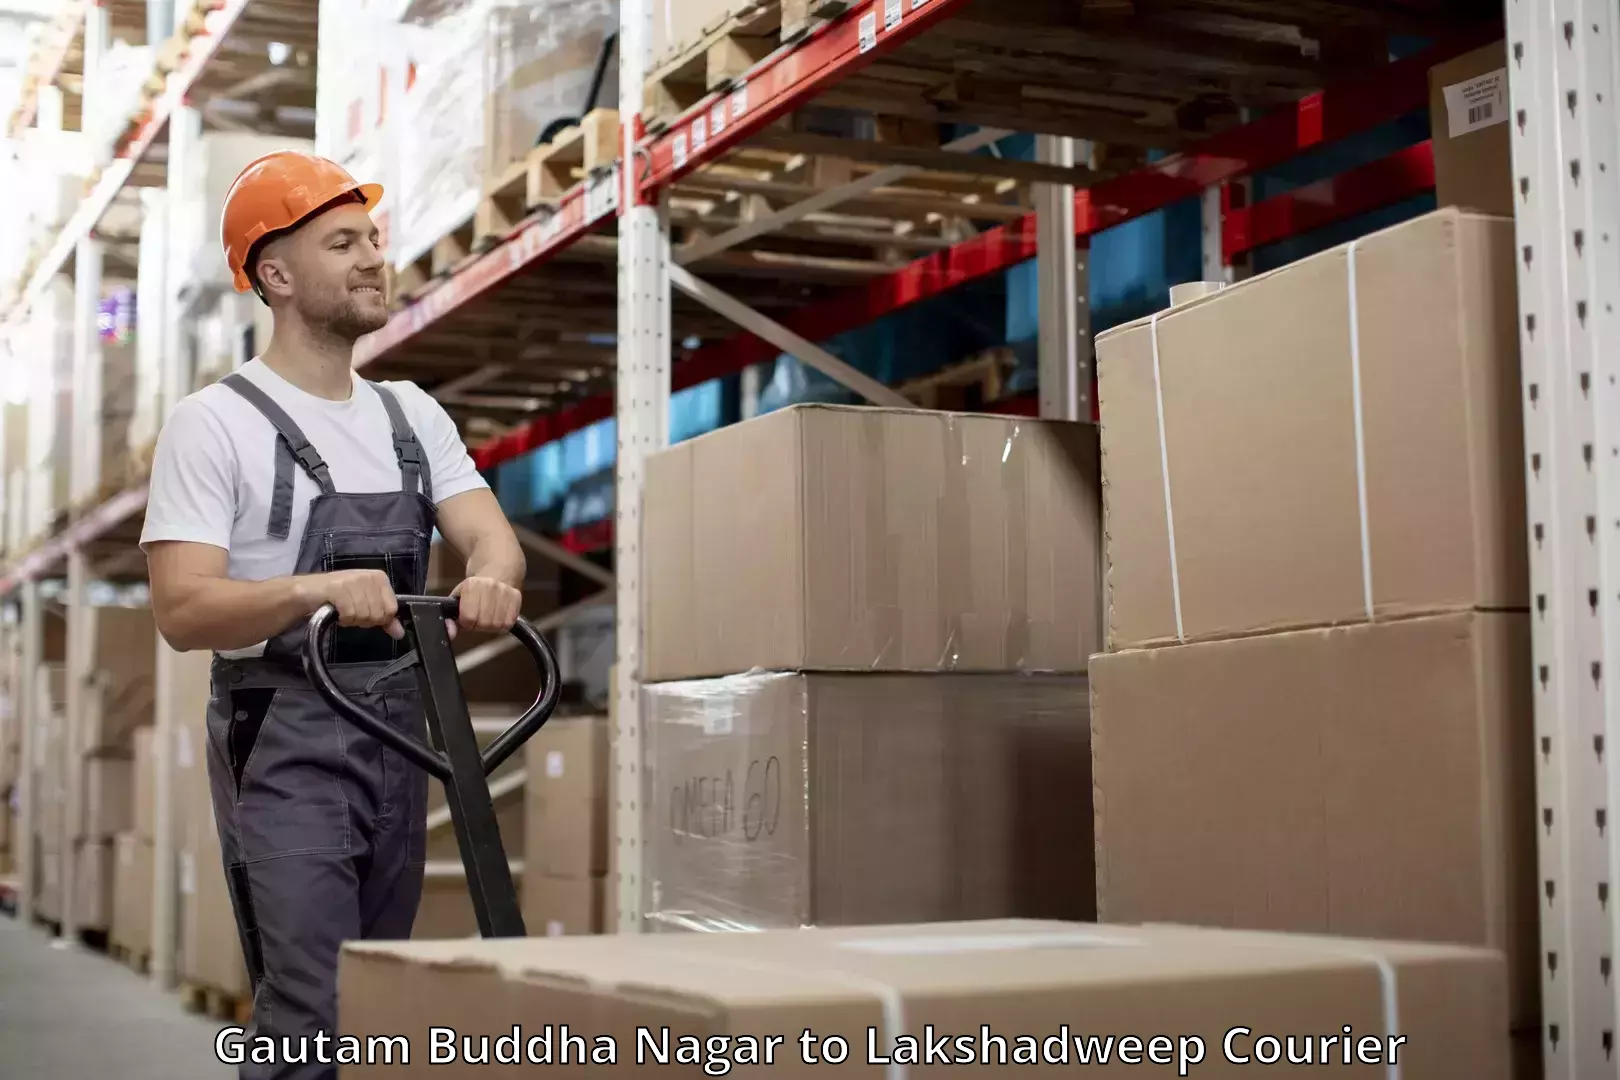 Luggage delivery app Gautam Buddha Nagar to Lakshadweep